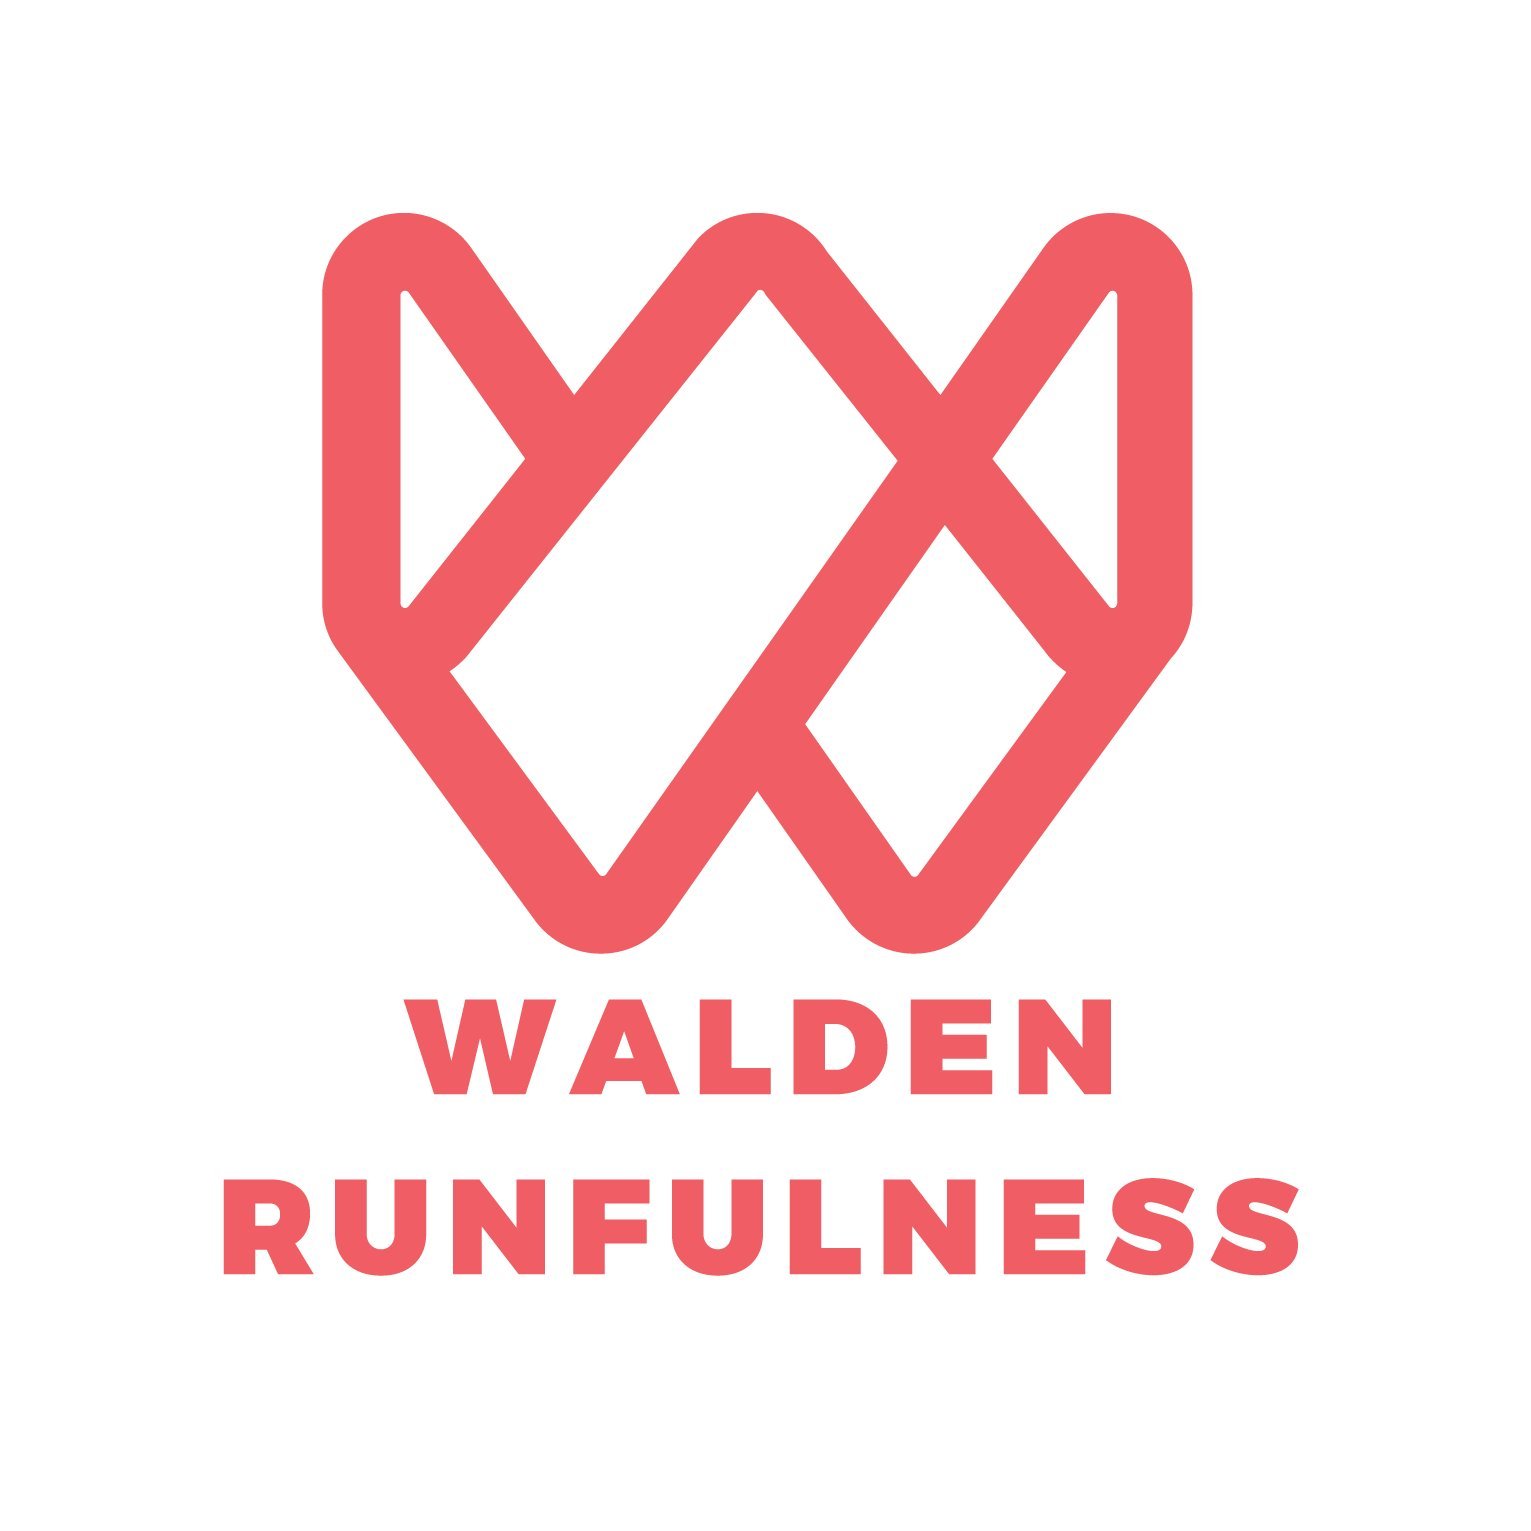 Fundadora del Walden Runfulness 
Transforma tu Running con el Método Walden. 
#mindfulness #running #runfulness #metodowalden #mdinfulrunning